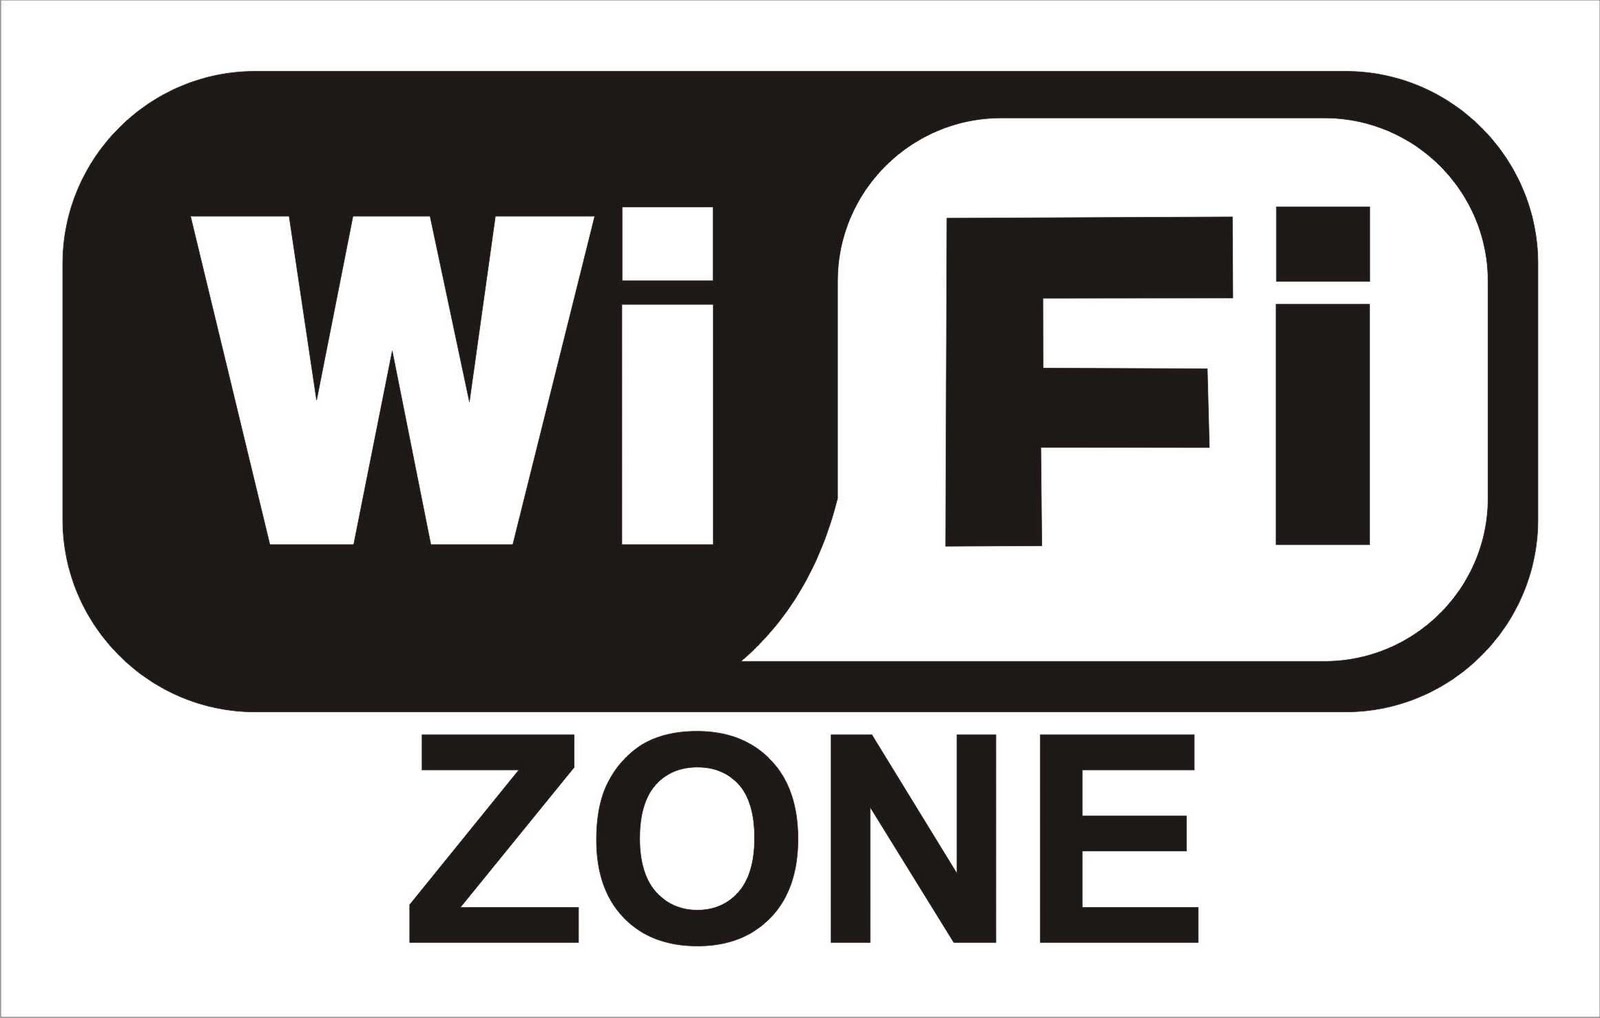 http://adiozh.files.wordpress.com/2013/07/wifi-logo.jpg